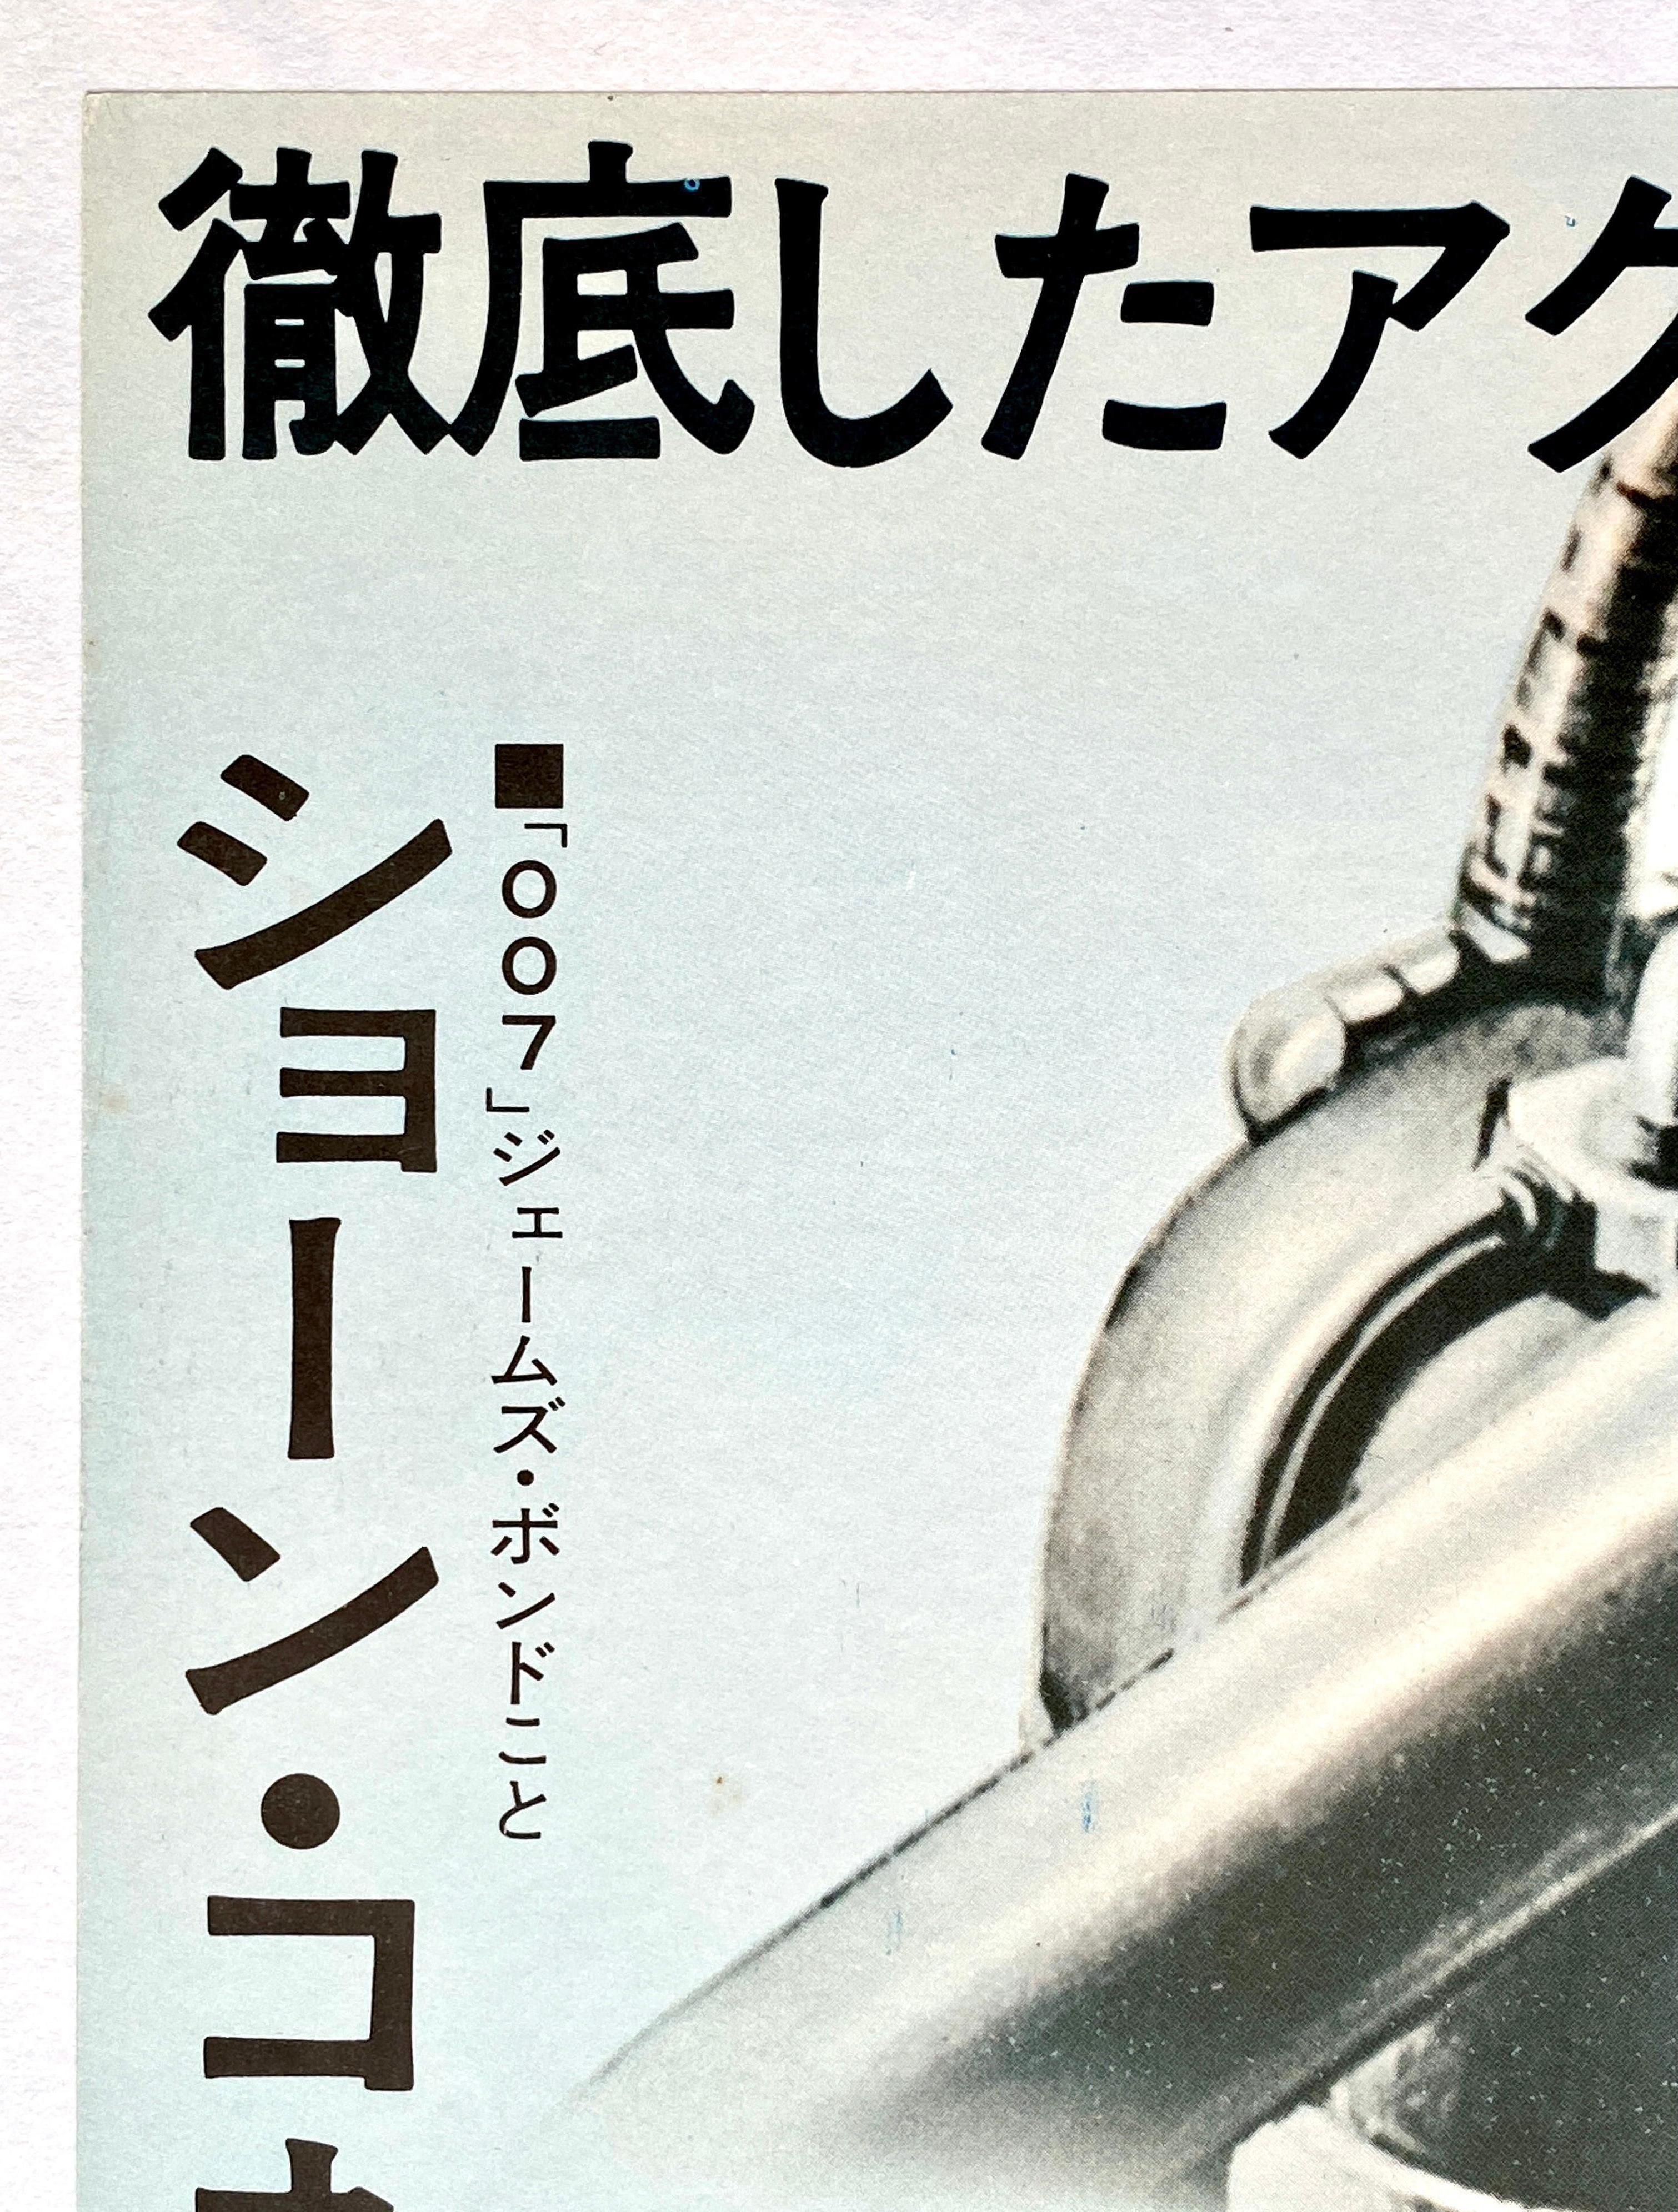 James Bond 'Thunderball' Original Vintage Movie Poster, Japanese, 1965 For Sale 4